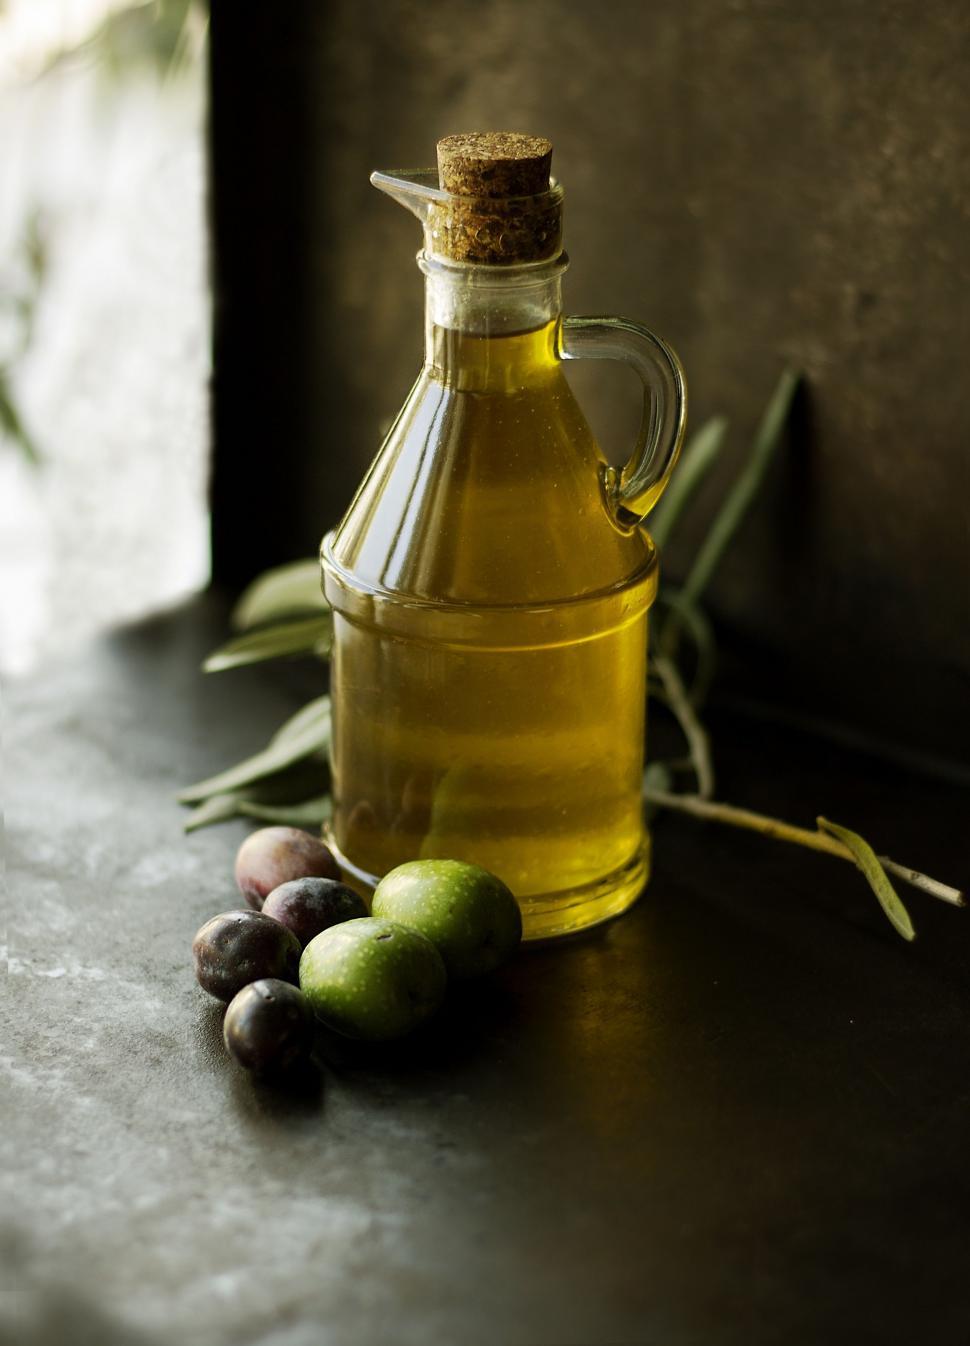 Free Image of Bottle of Olive Oil  